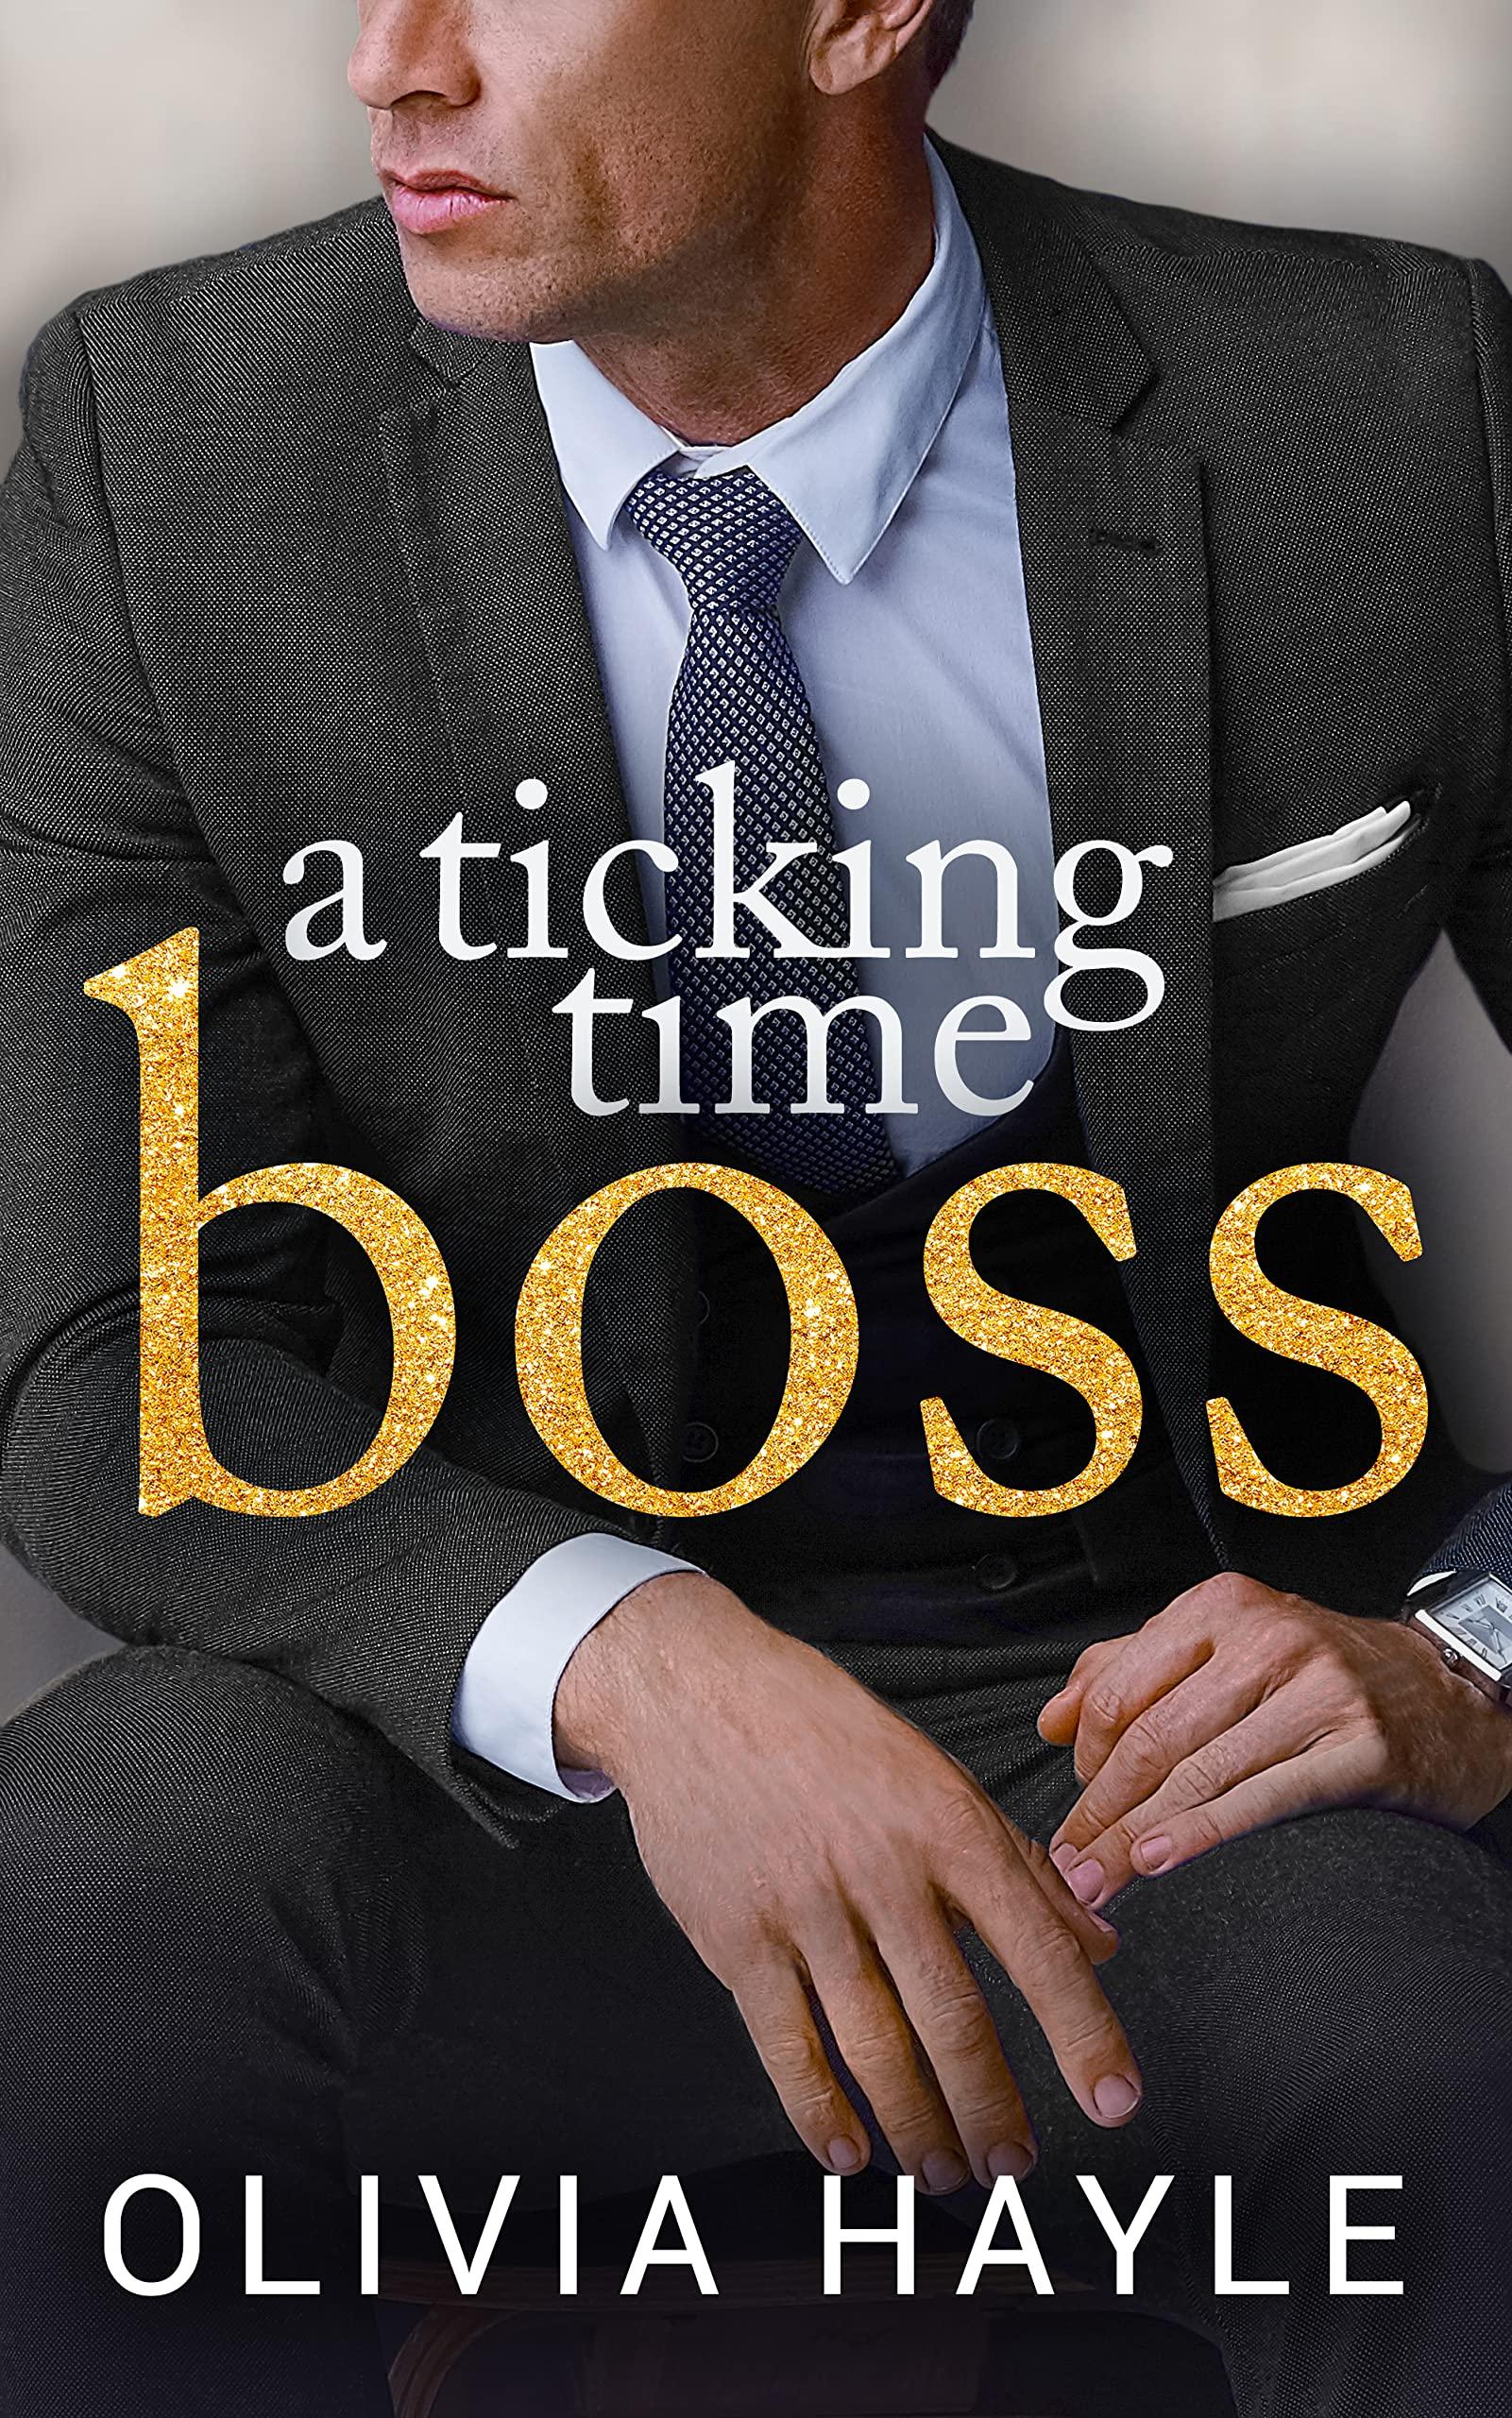 A Ticking Time Boss